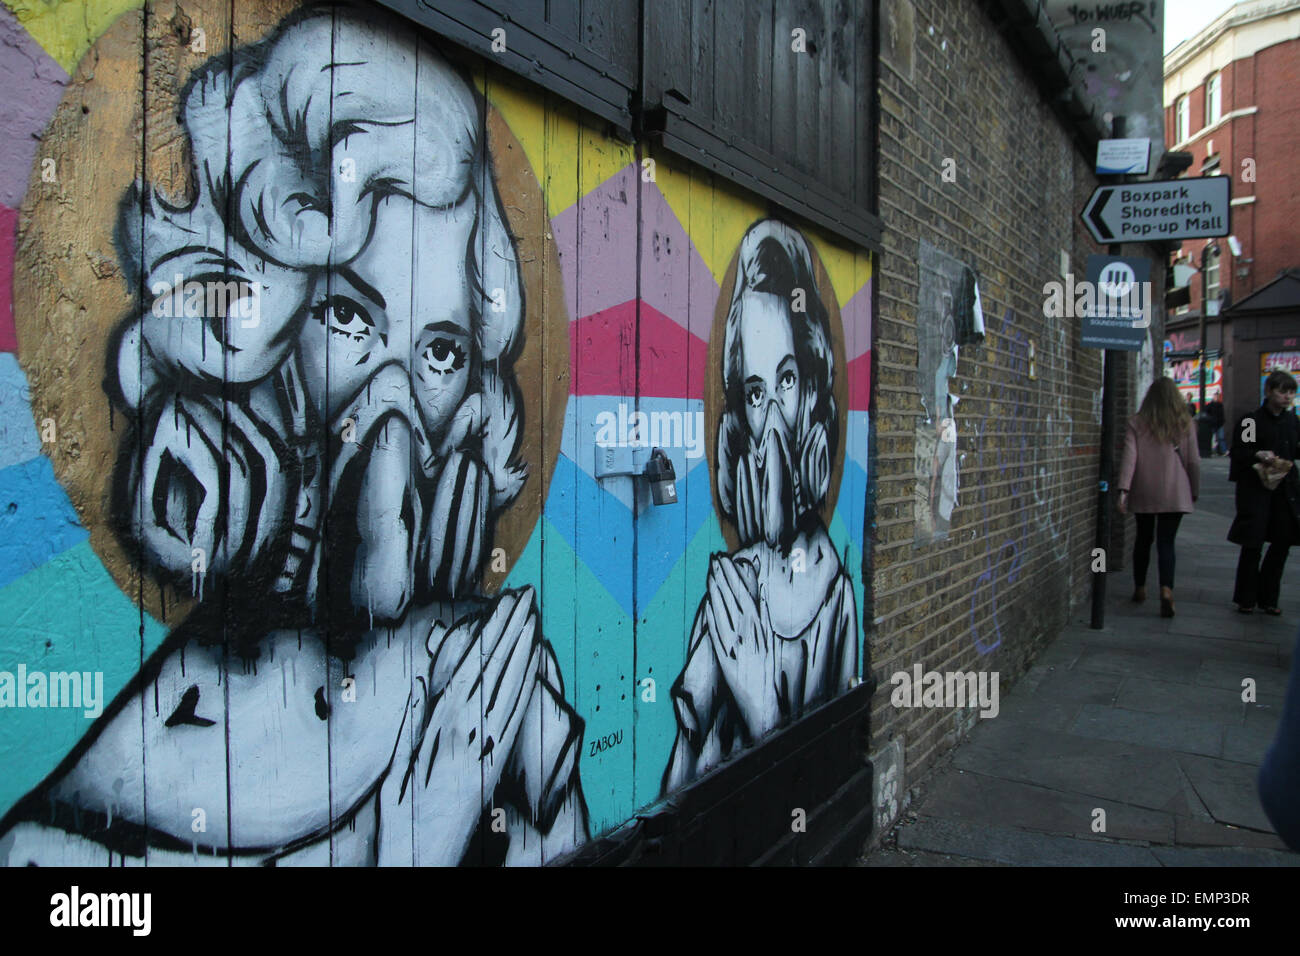 London, UK. 21 April 2015. People seen walking past a large graffiti mural on Brick Lane. Credit: David Mbiyu/ Alamy Stock Photo